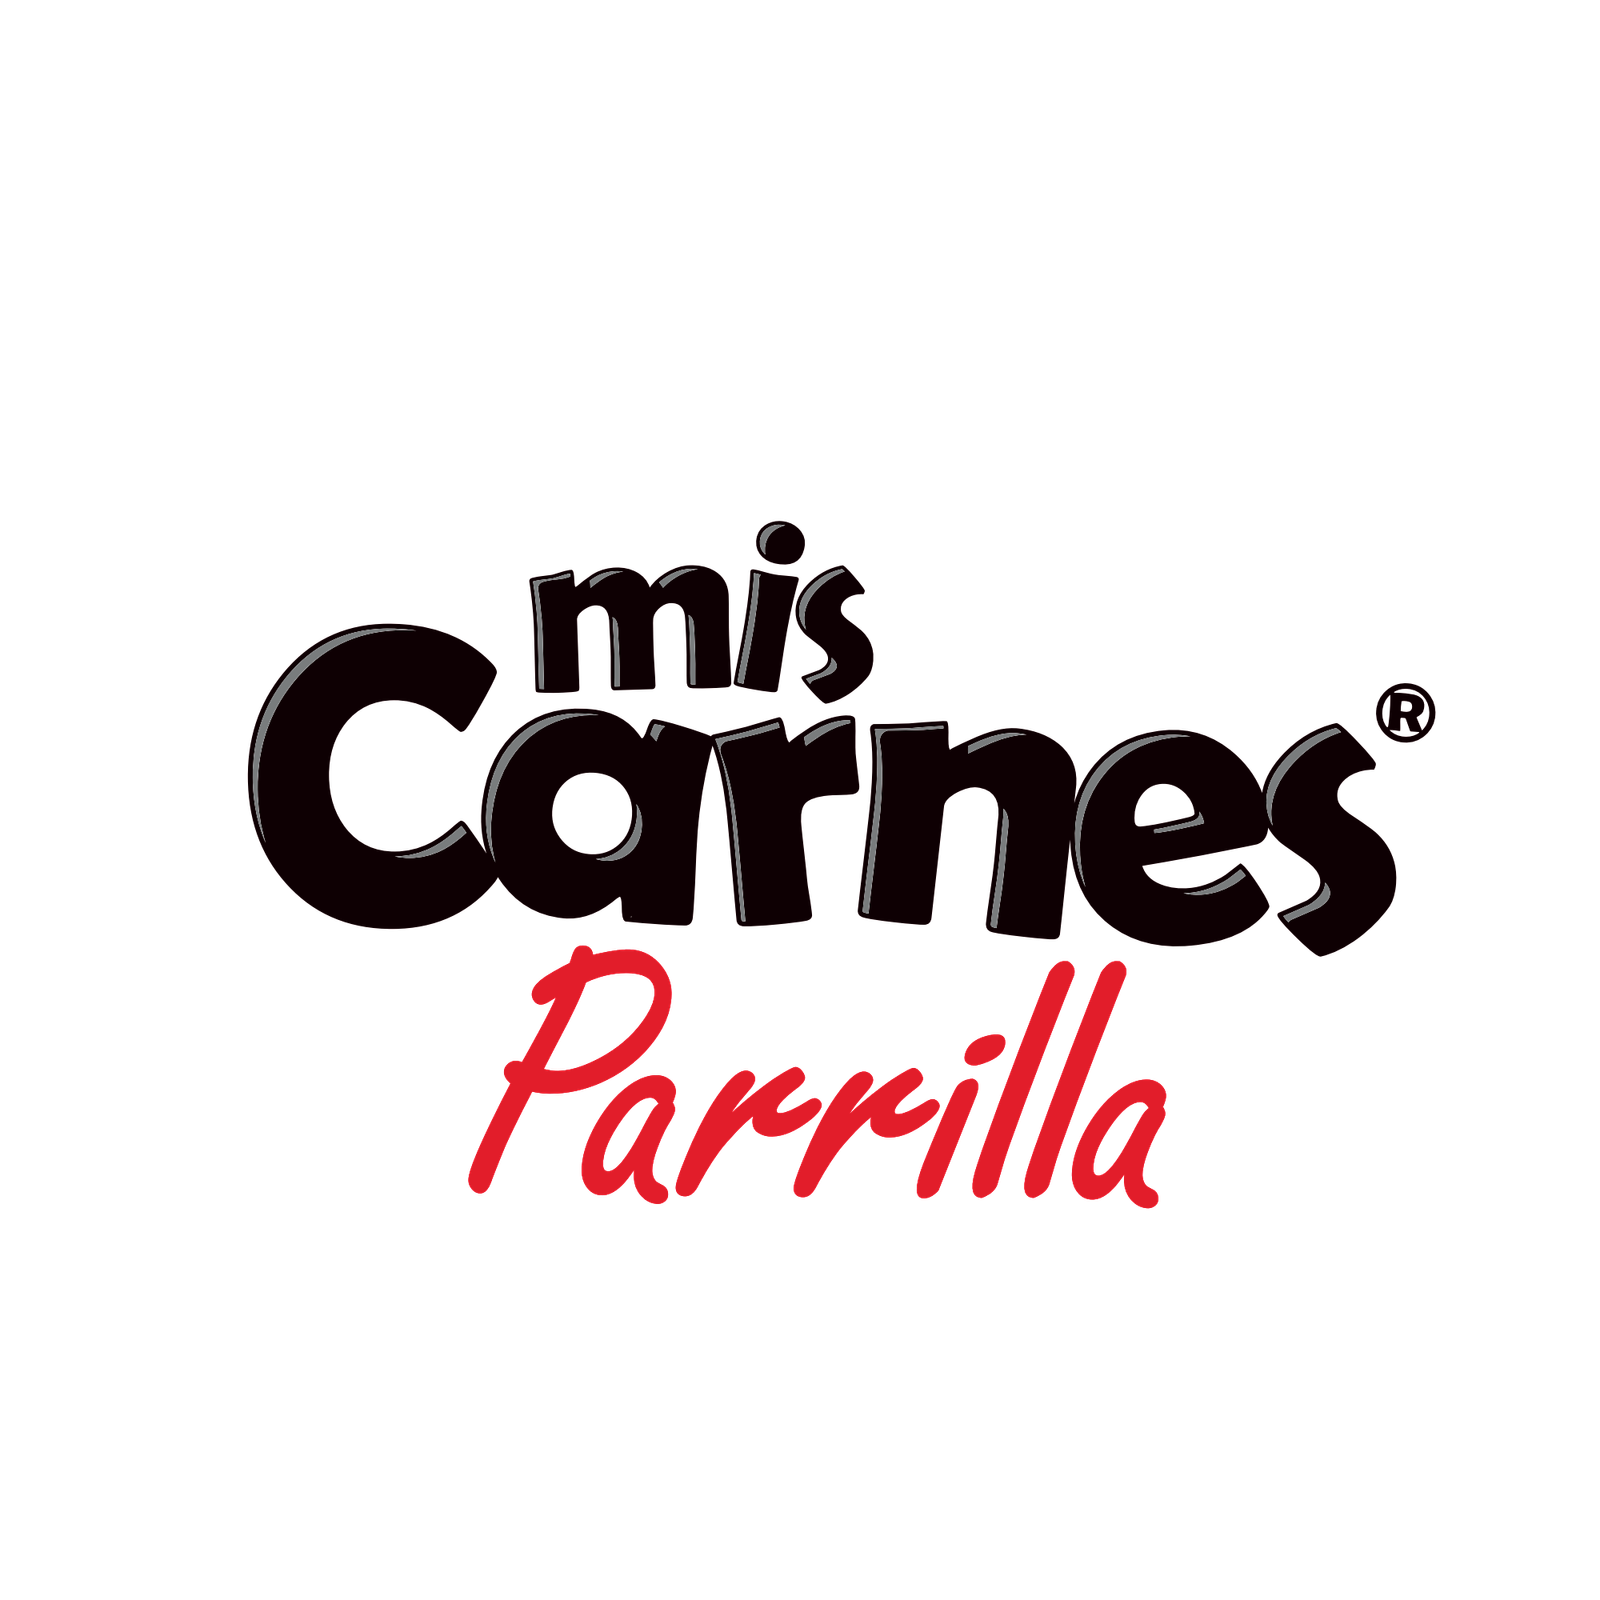 www.miscarnesparrilla.com